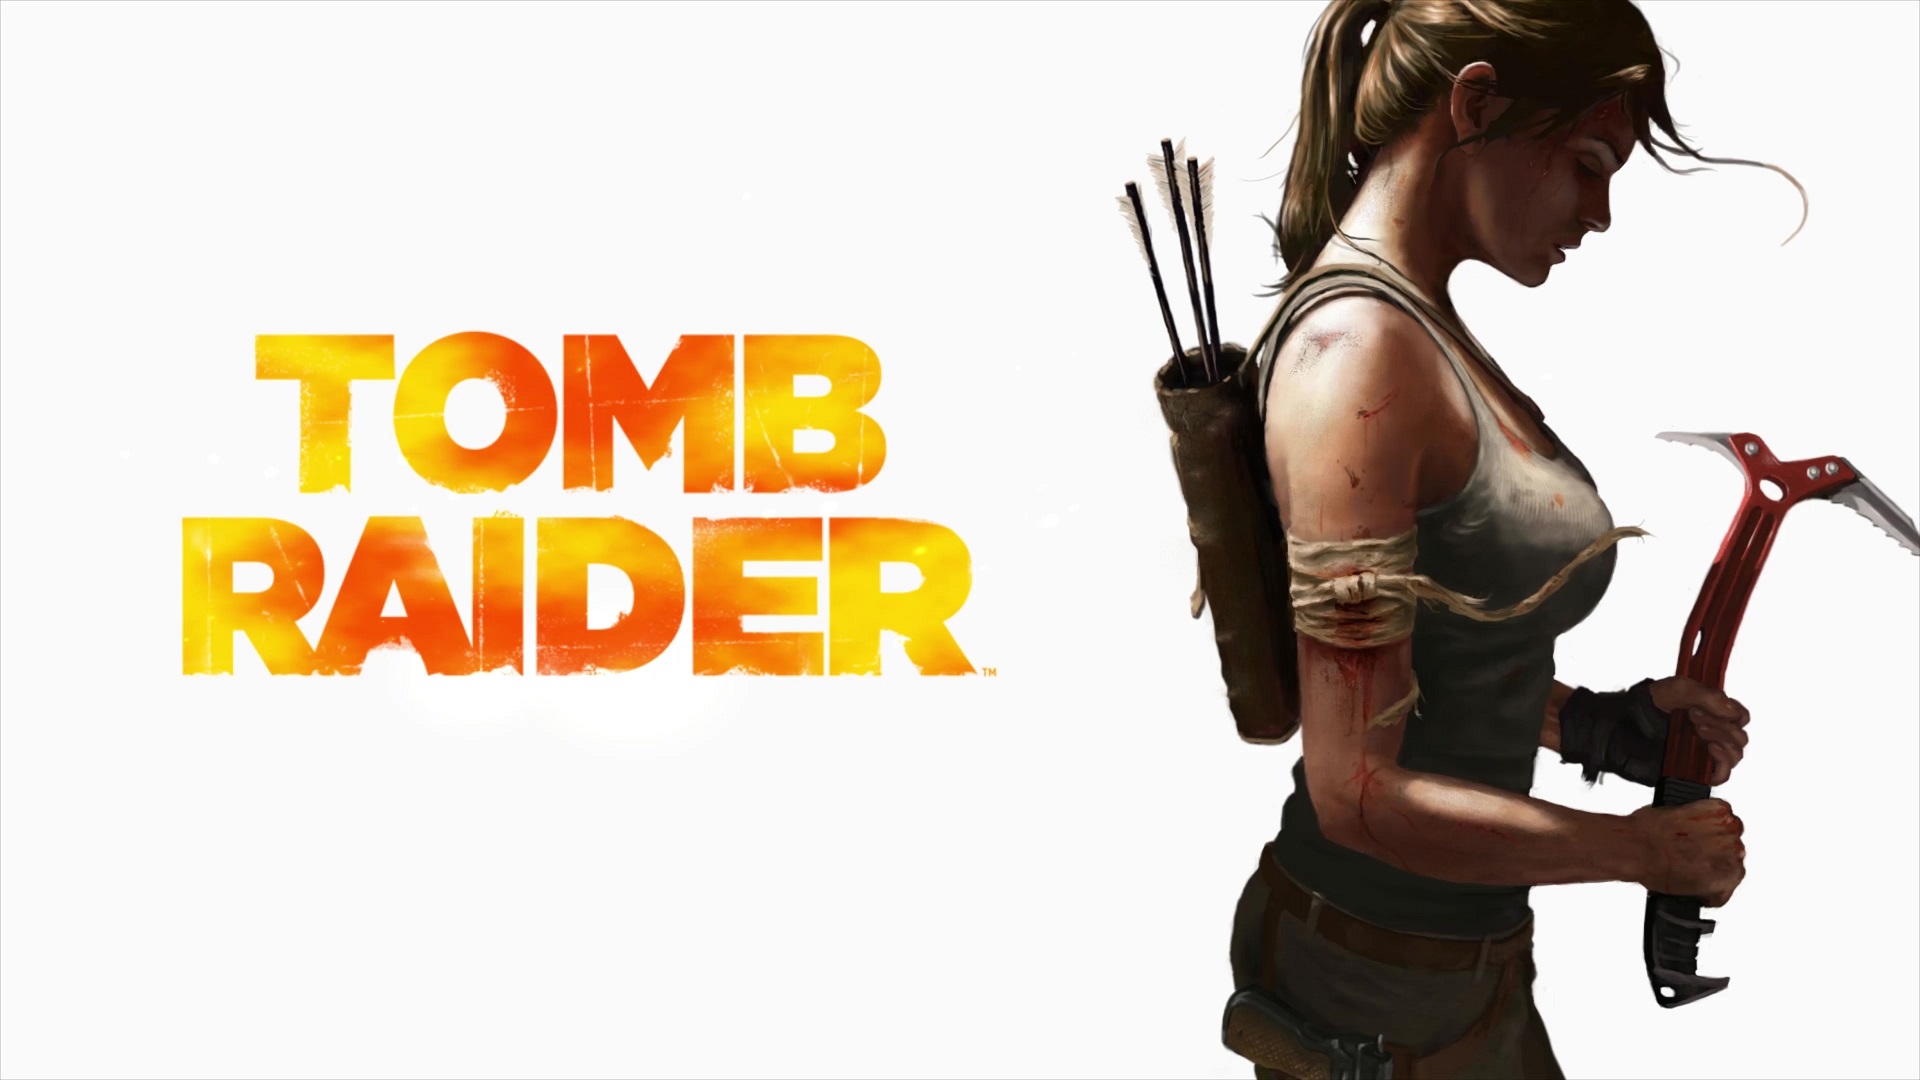 6. "Tomb Raider" - wide 6